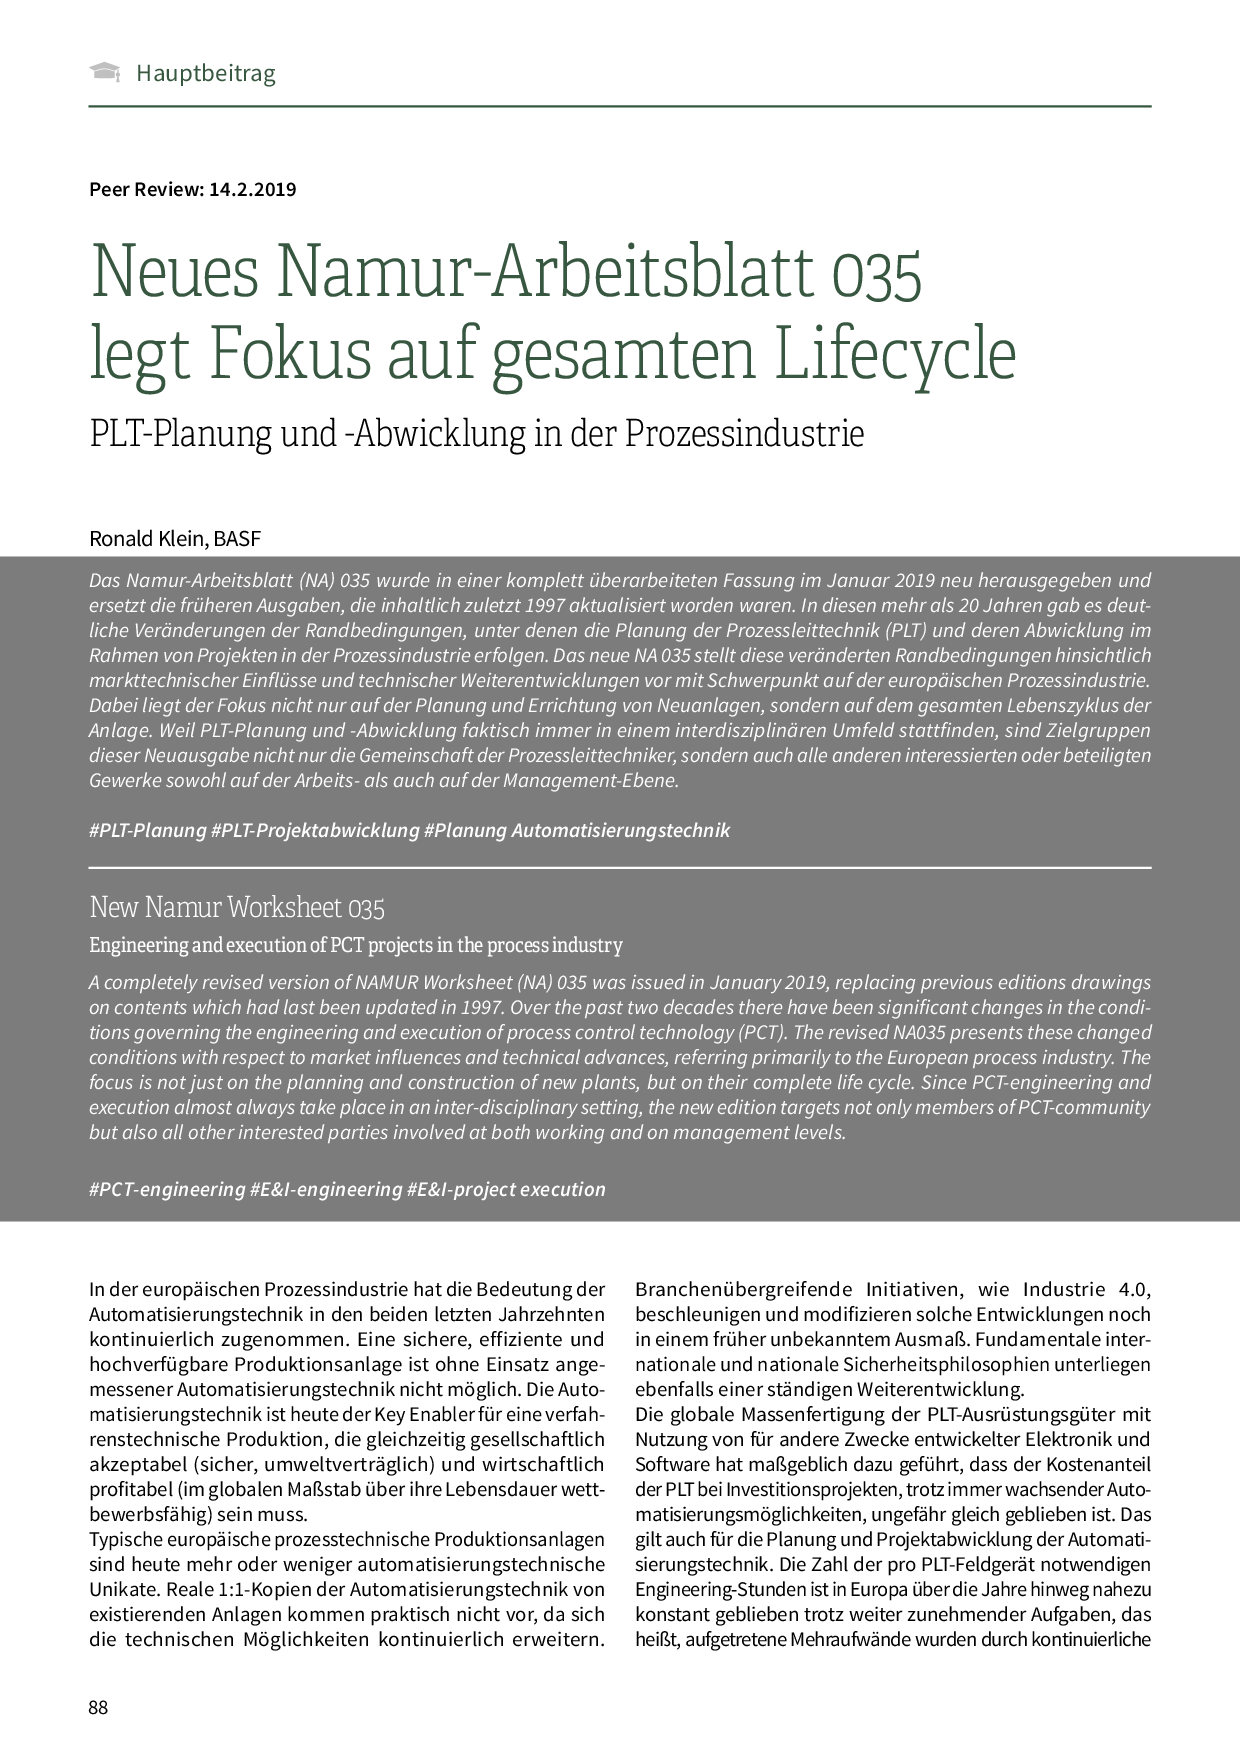 Neues Namur-Arbeitsblatt 035 legt Fokus auf gesamten Lifecycle